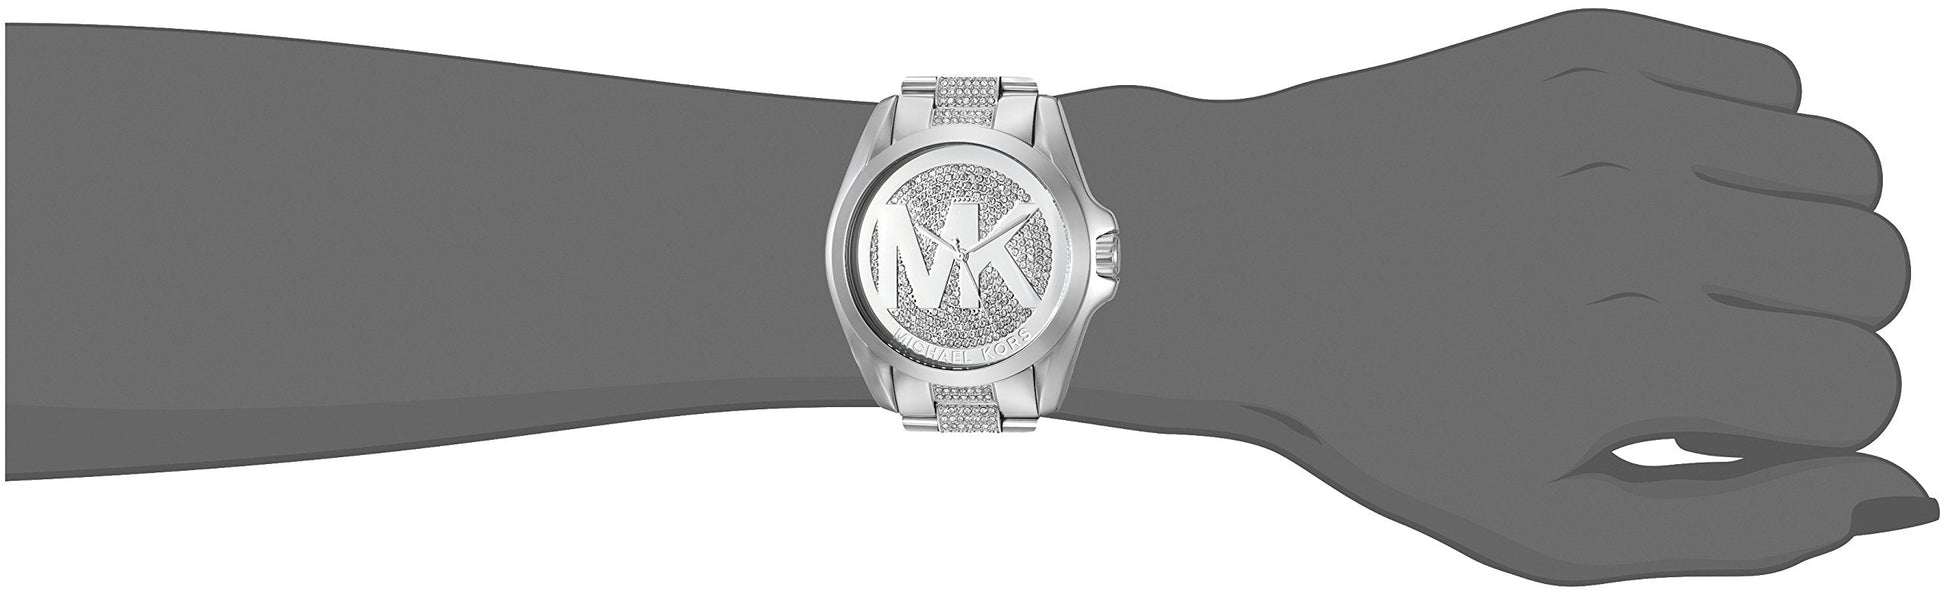 Michael Kors Bradshaw Silver Dial Silver Steel Strap Watch for Women - MK6486